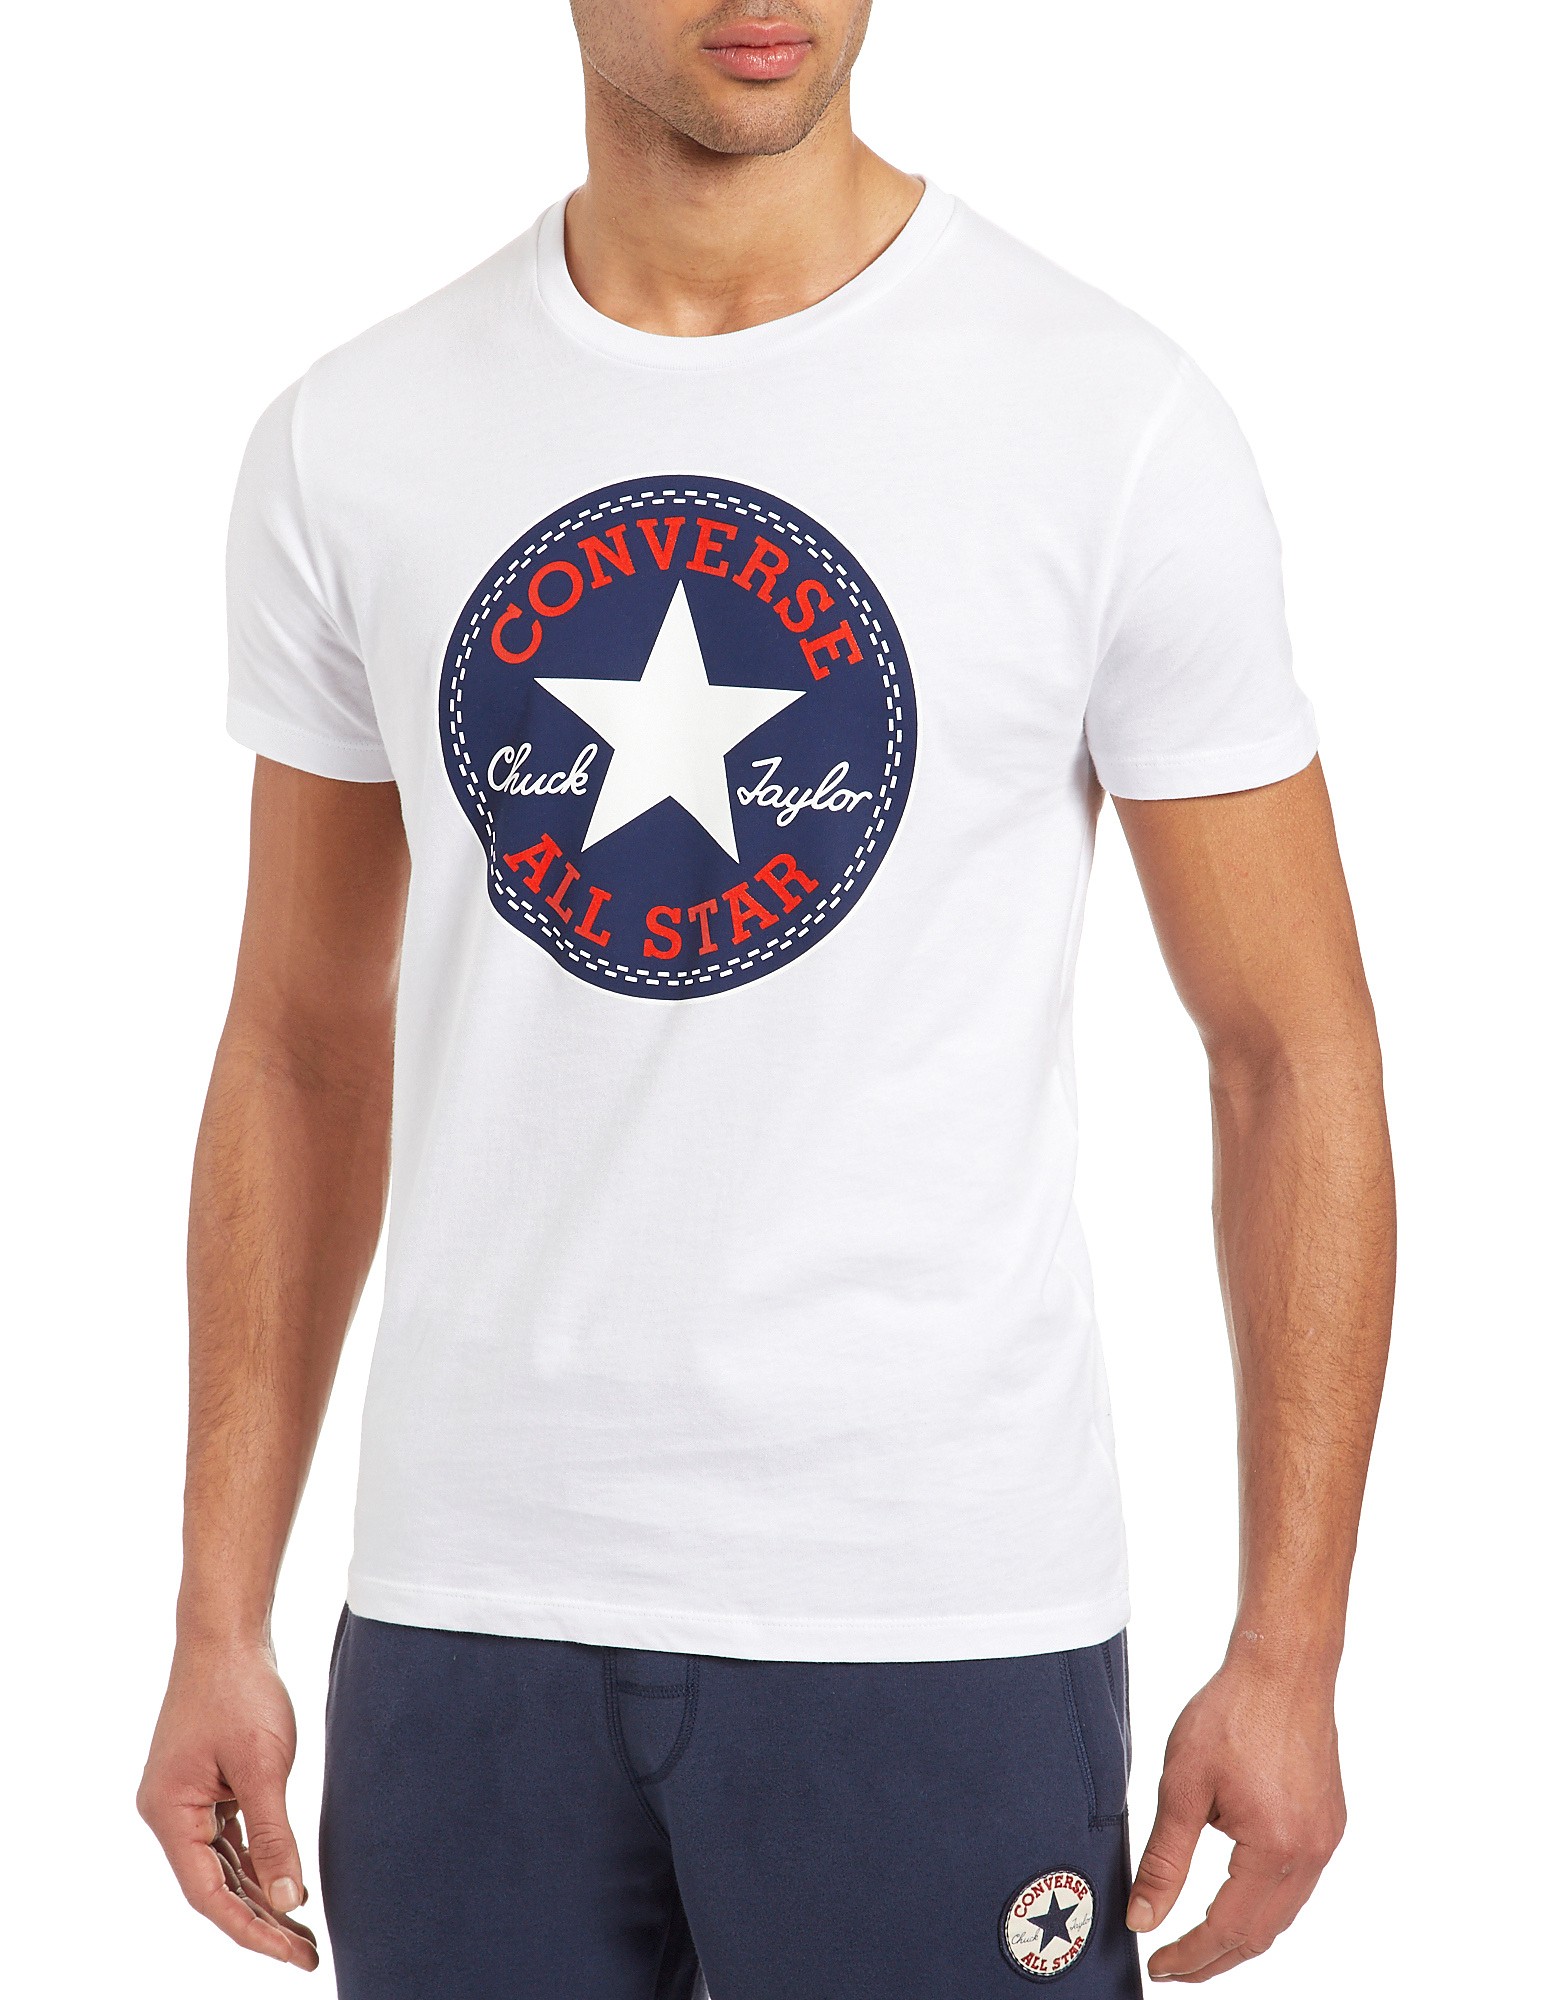 Converse Chuck Patch Print T-Shirt